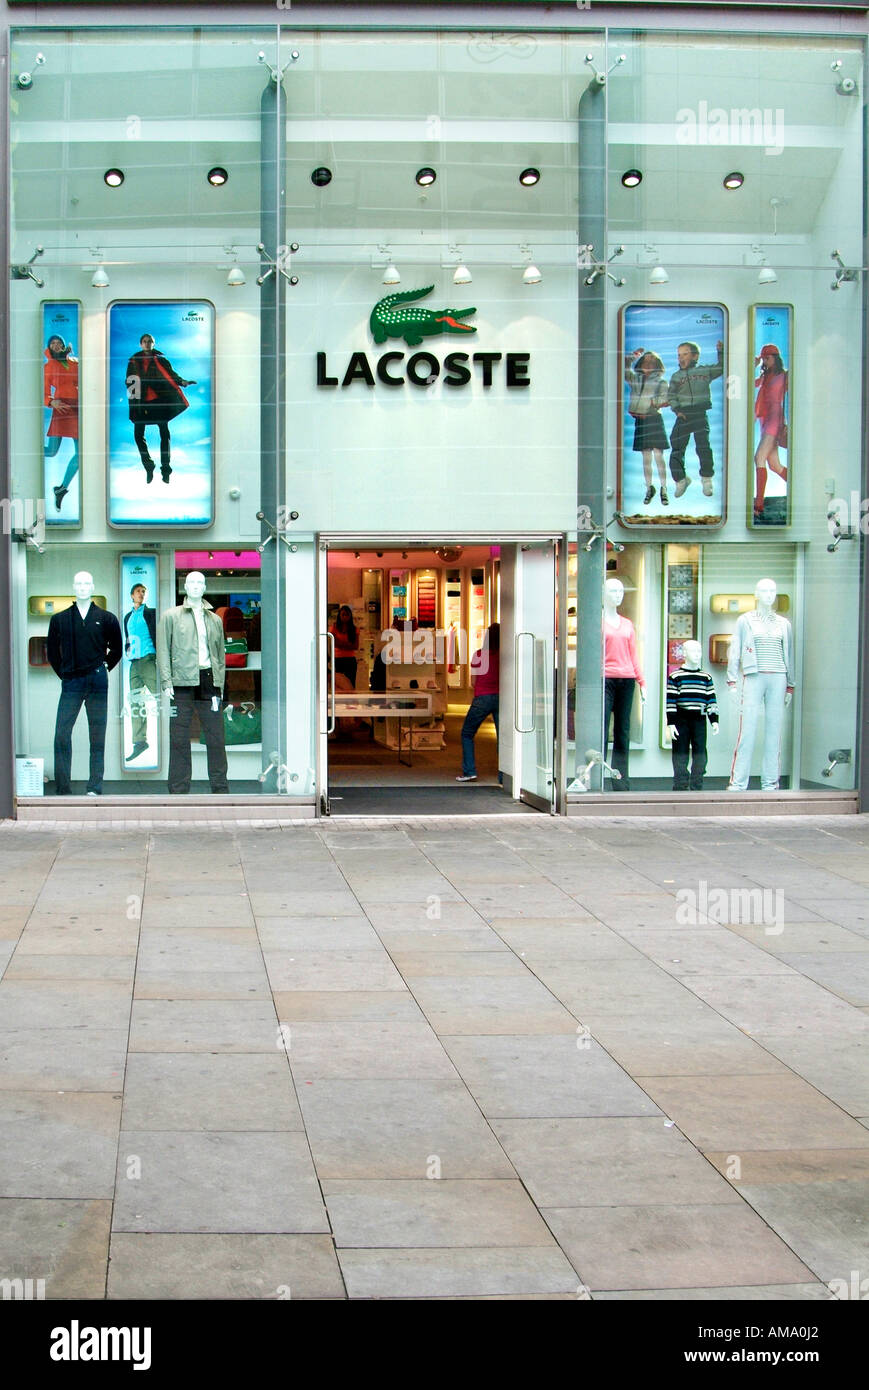 Lacoste shop front Department store retail UK United Kingdom England Europe  GB Great Britain EU European Union Stock Photo - Alamy